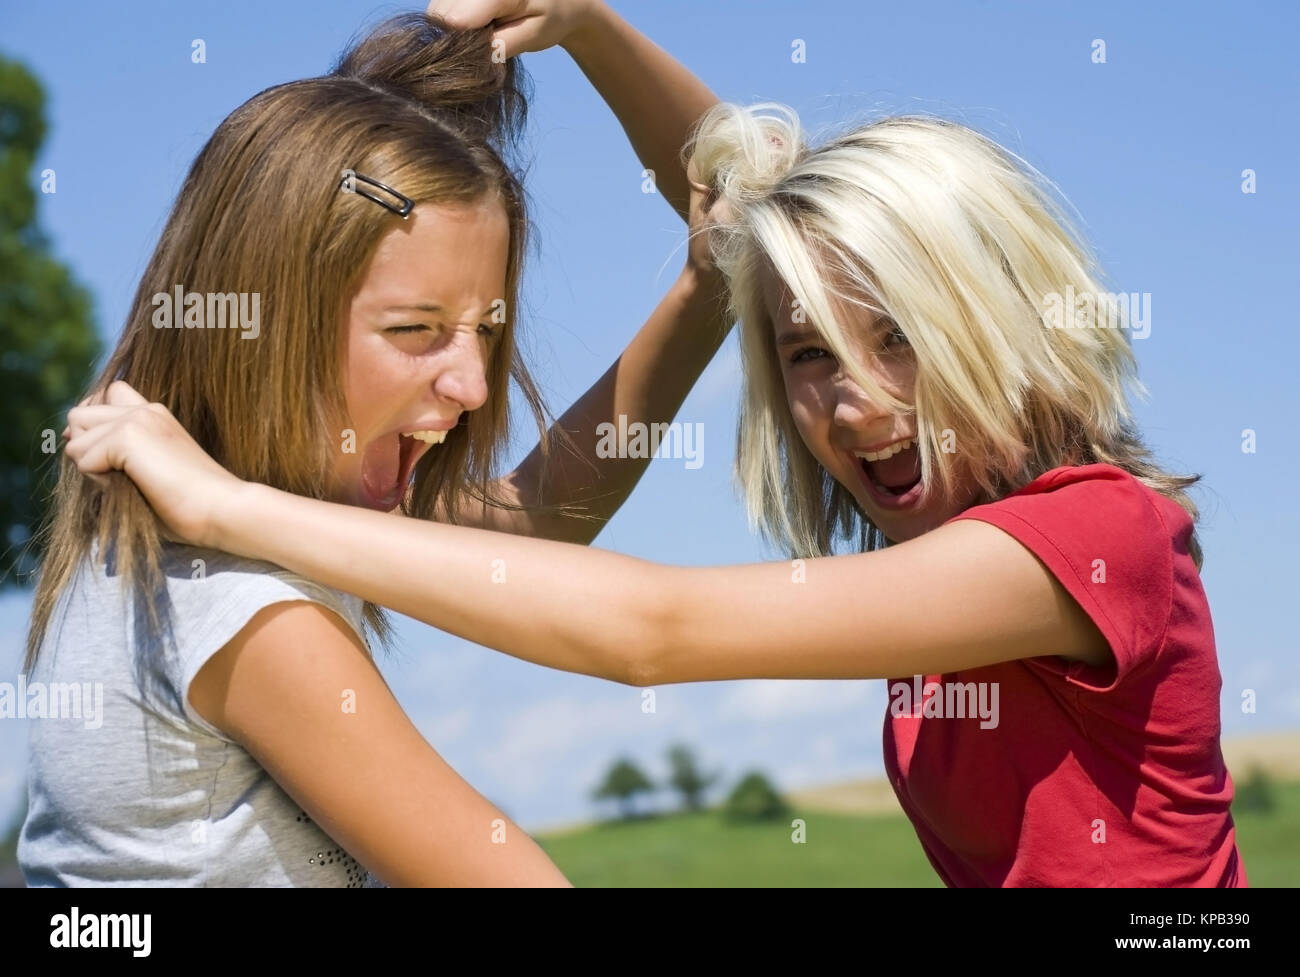 Model release, Zwei Freundinen raufen miteinander - two girl friends fight with each other Stock Photo